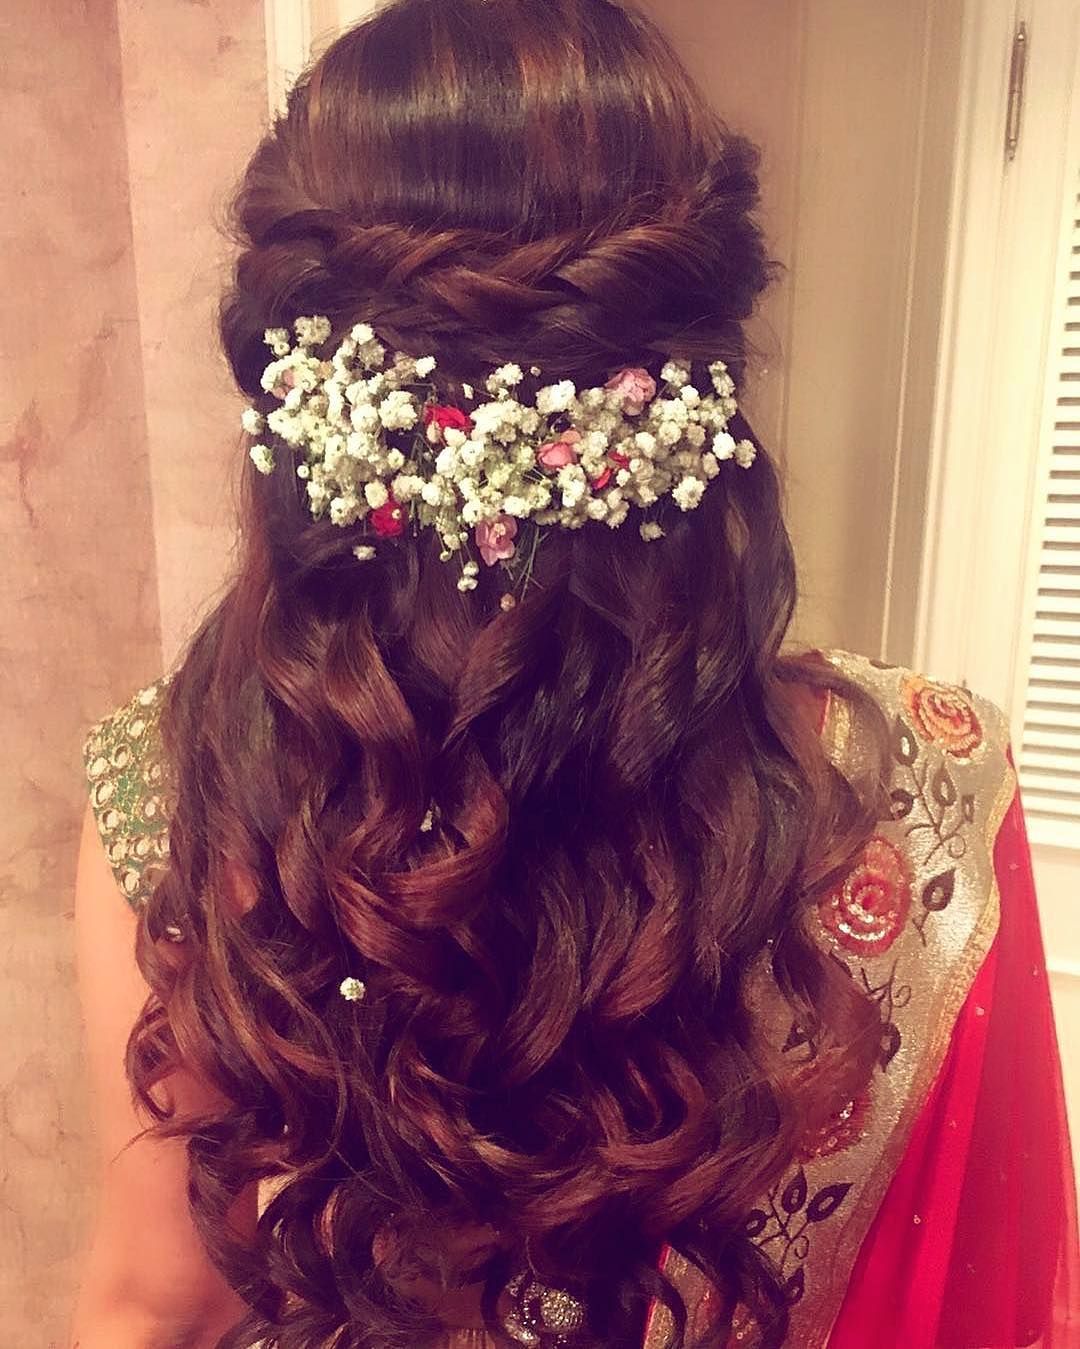 Afsha rangila - makeupartist! | Engagement hairstyle for @priyankagopi # engagement #hairstyles #hairstyle #braids #braidstyles #braid  #braidedhairstyles #saree | Instagram